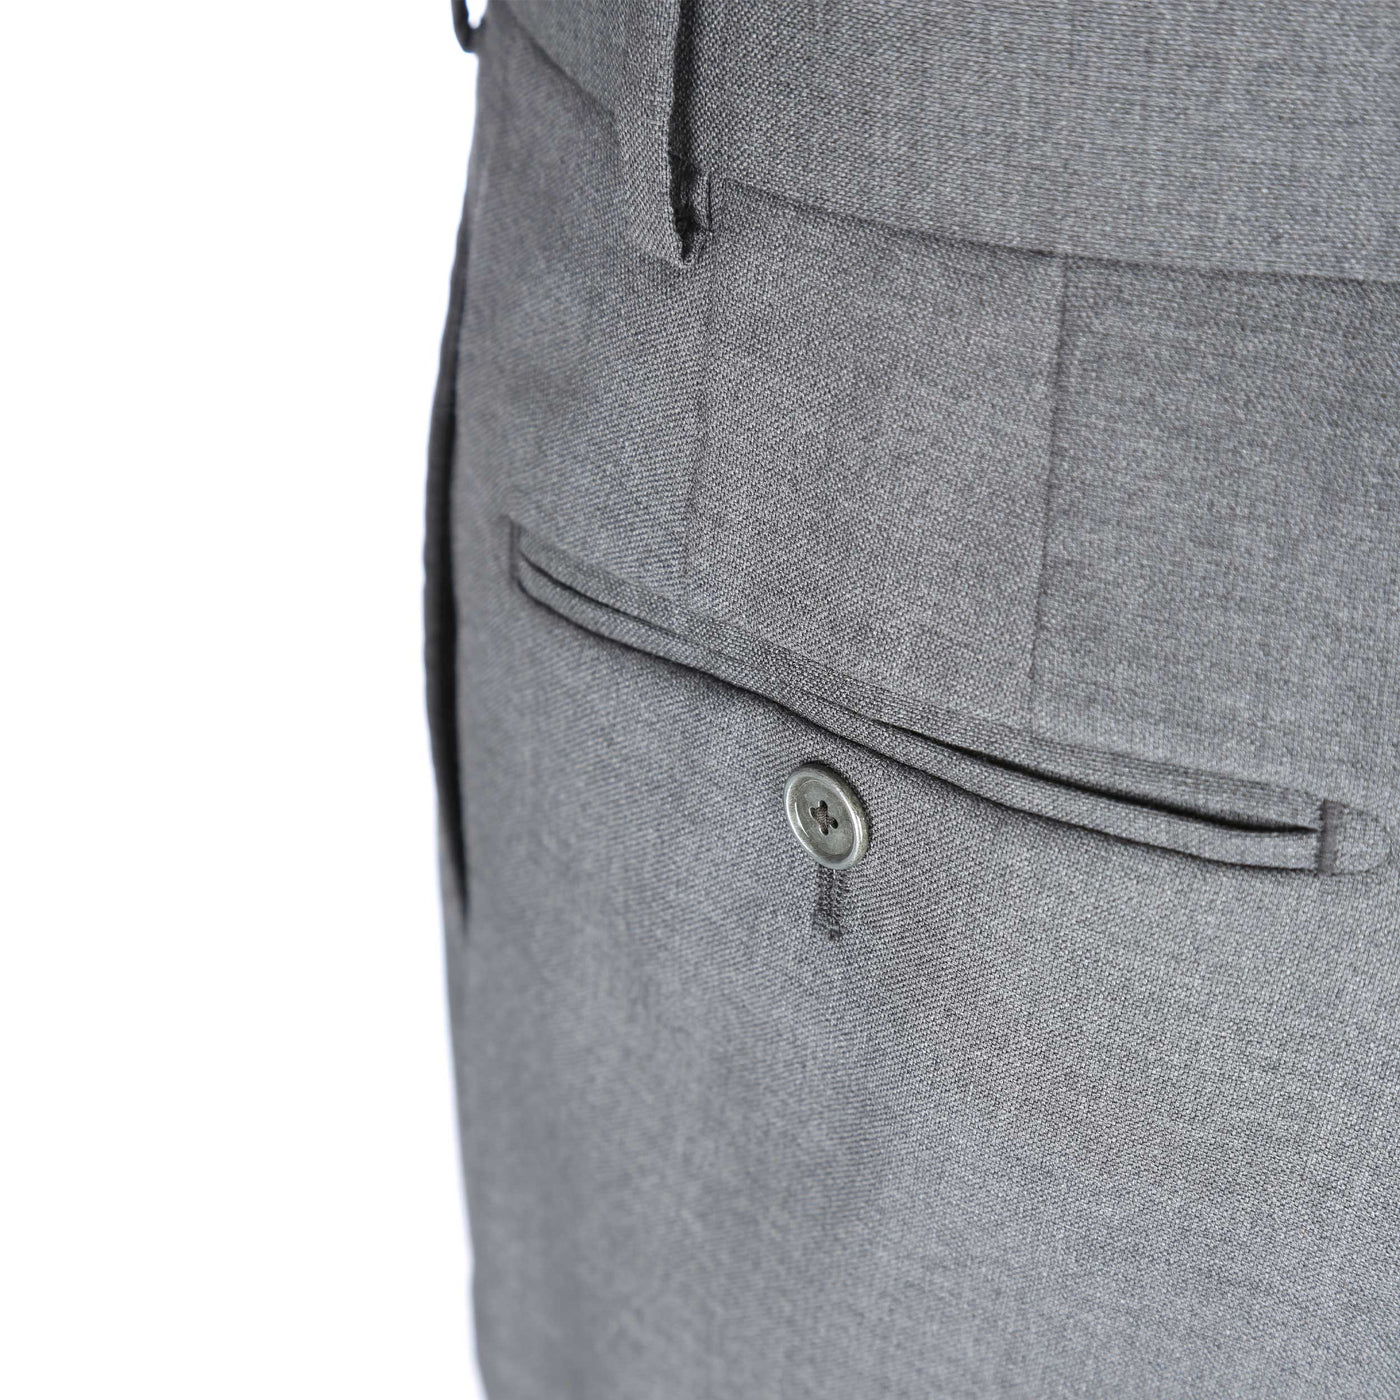 Norton Barrie Bespoke Suit in Mid Grey Lora Piana Seat Pocket